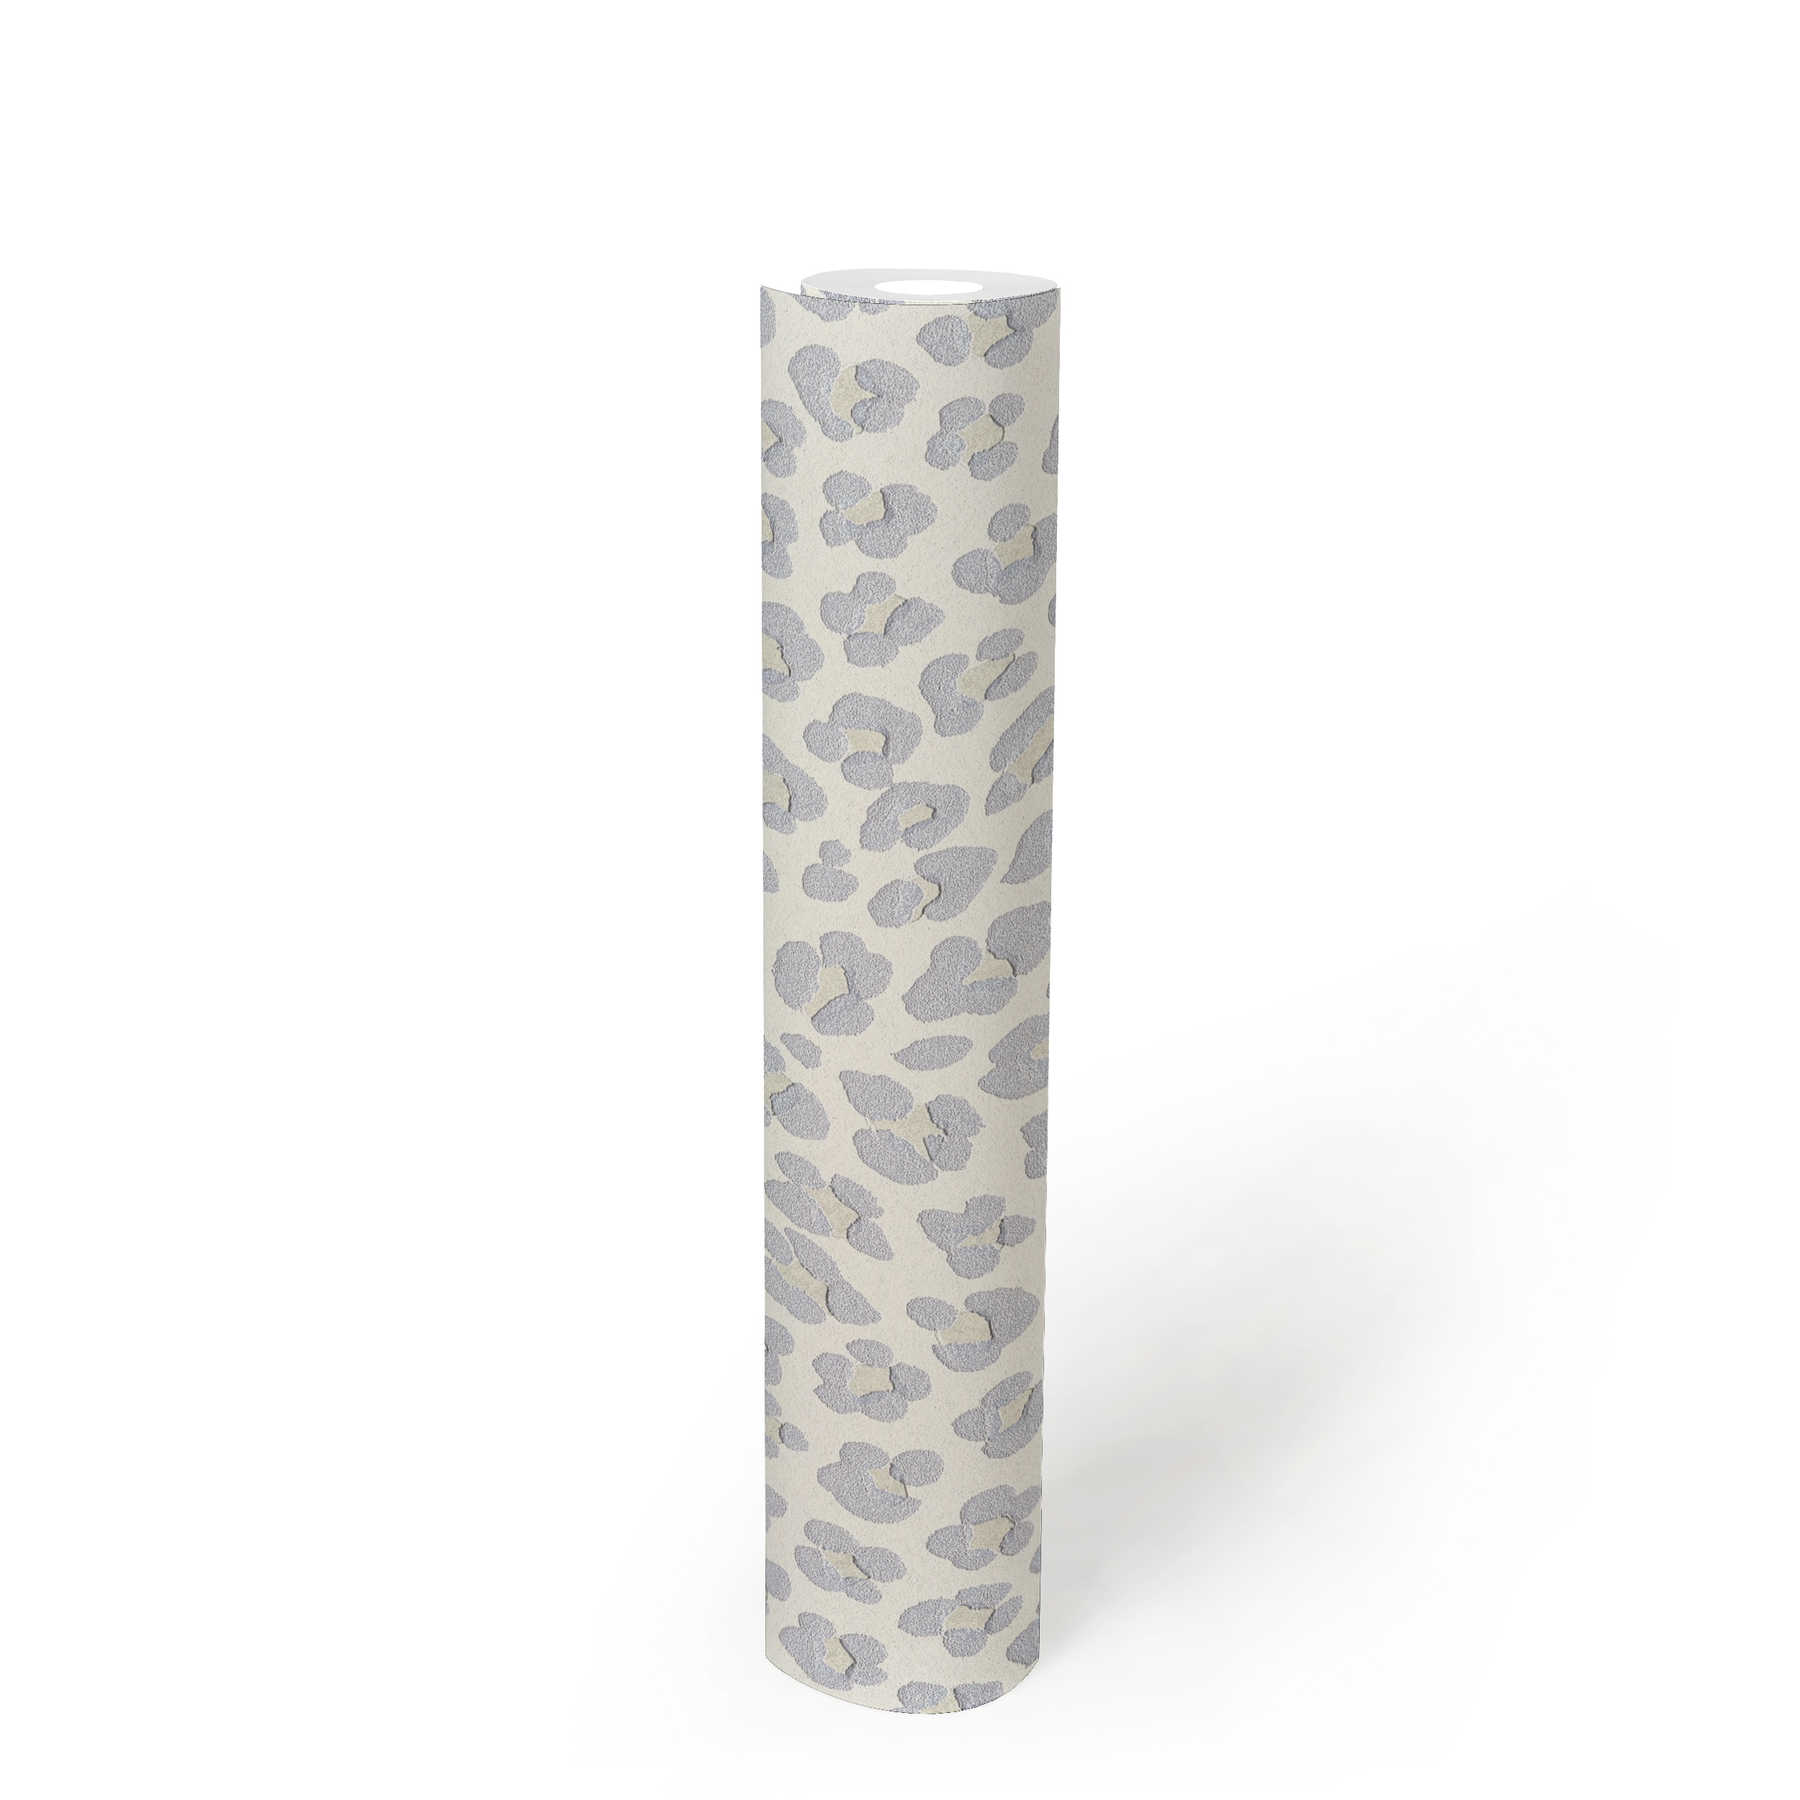             Wallpaper animal print leopard with metallic accent - cream
        